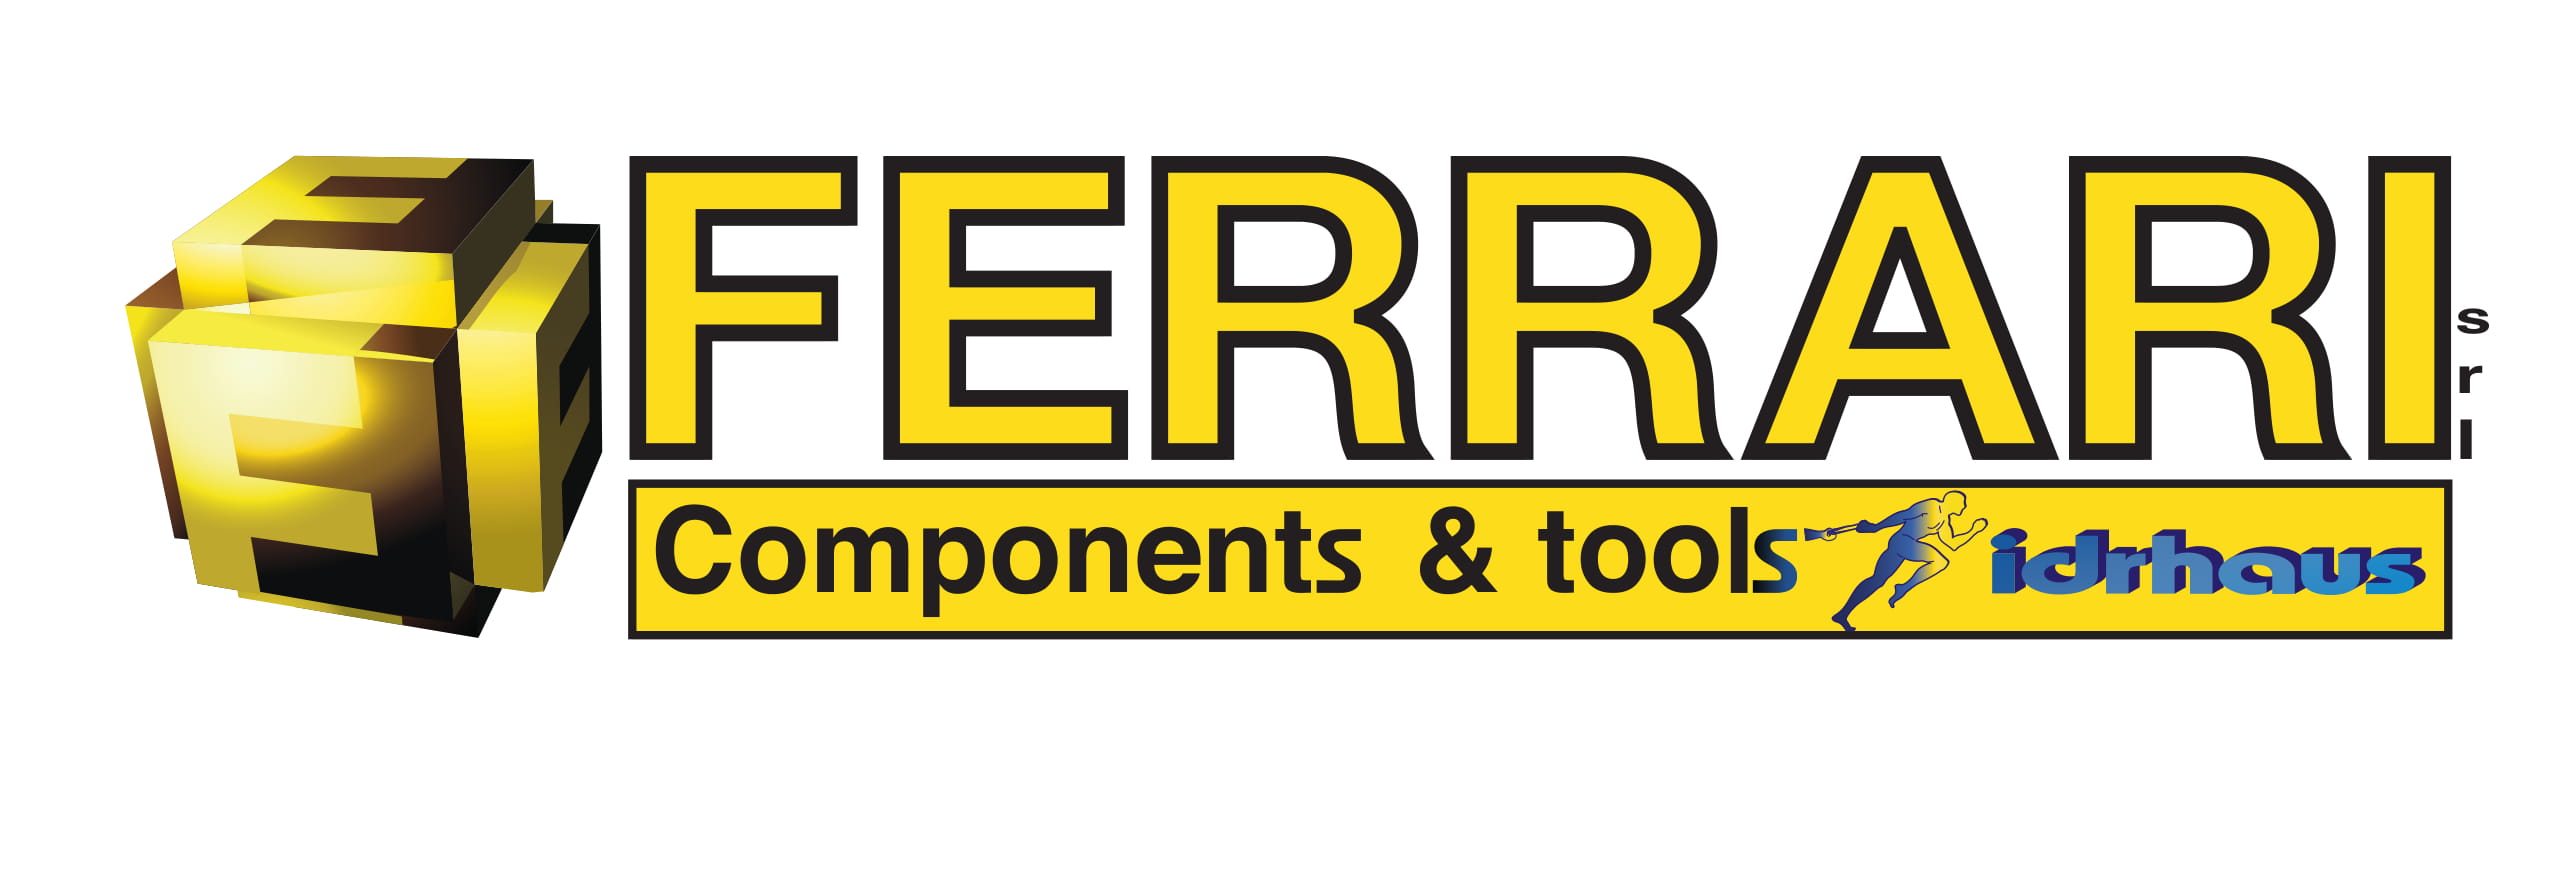 Ferrari-_logo-1.jpg